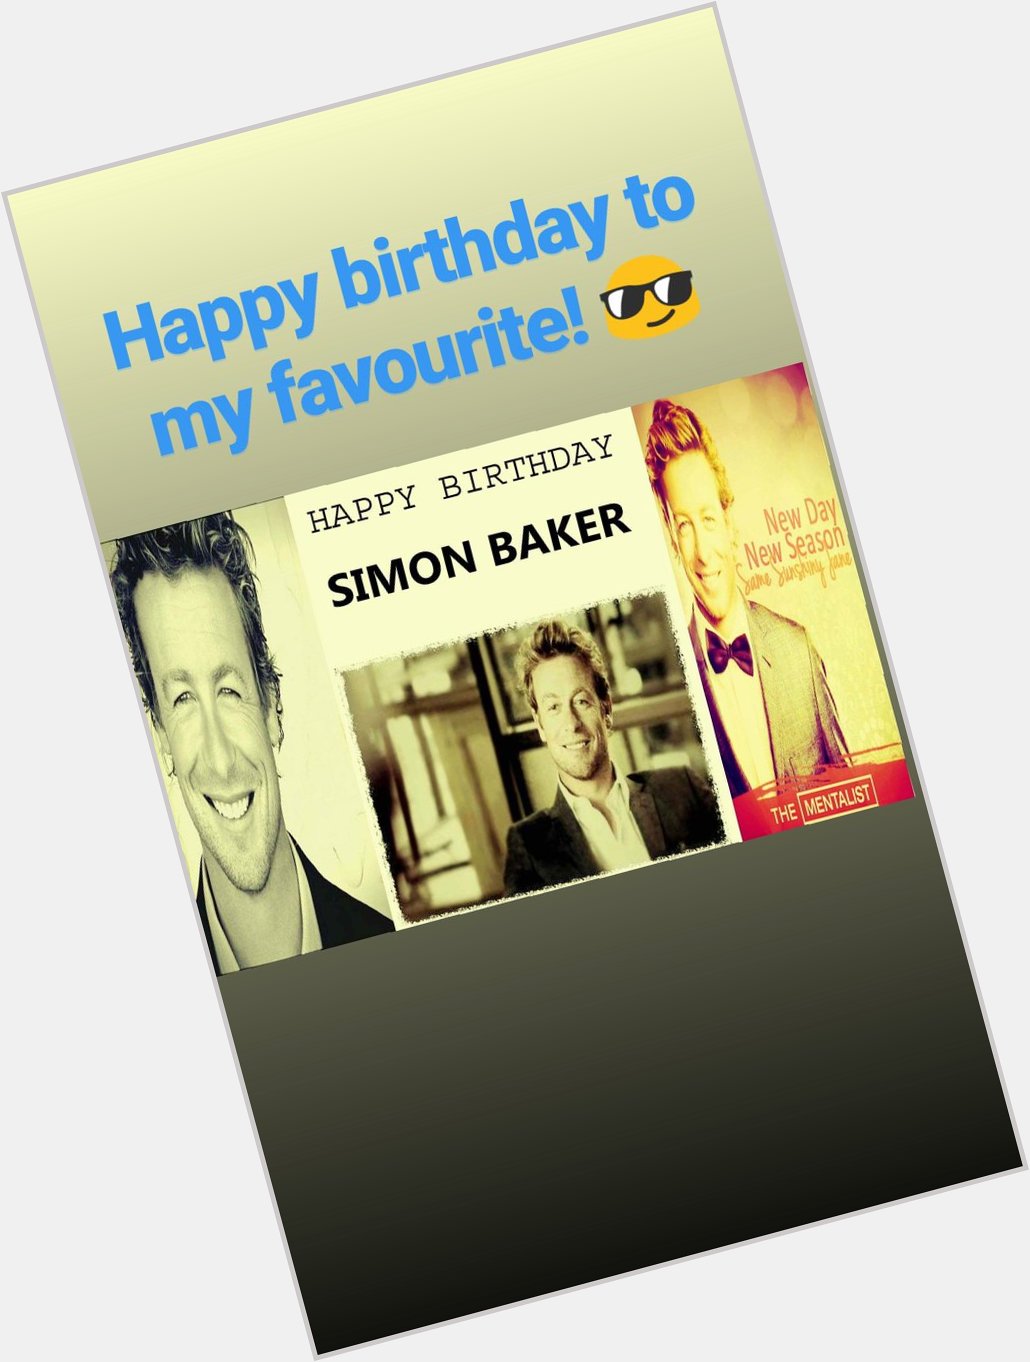 Happy birthday Simon Baker!
You are my favourite!       